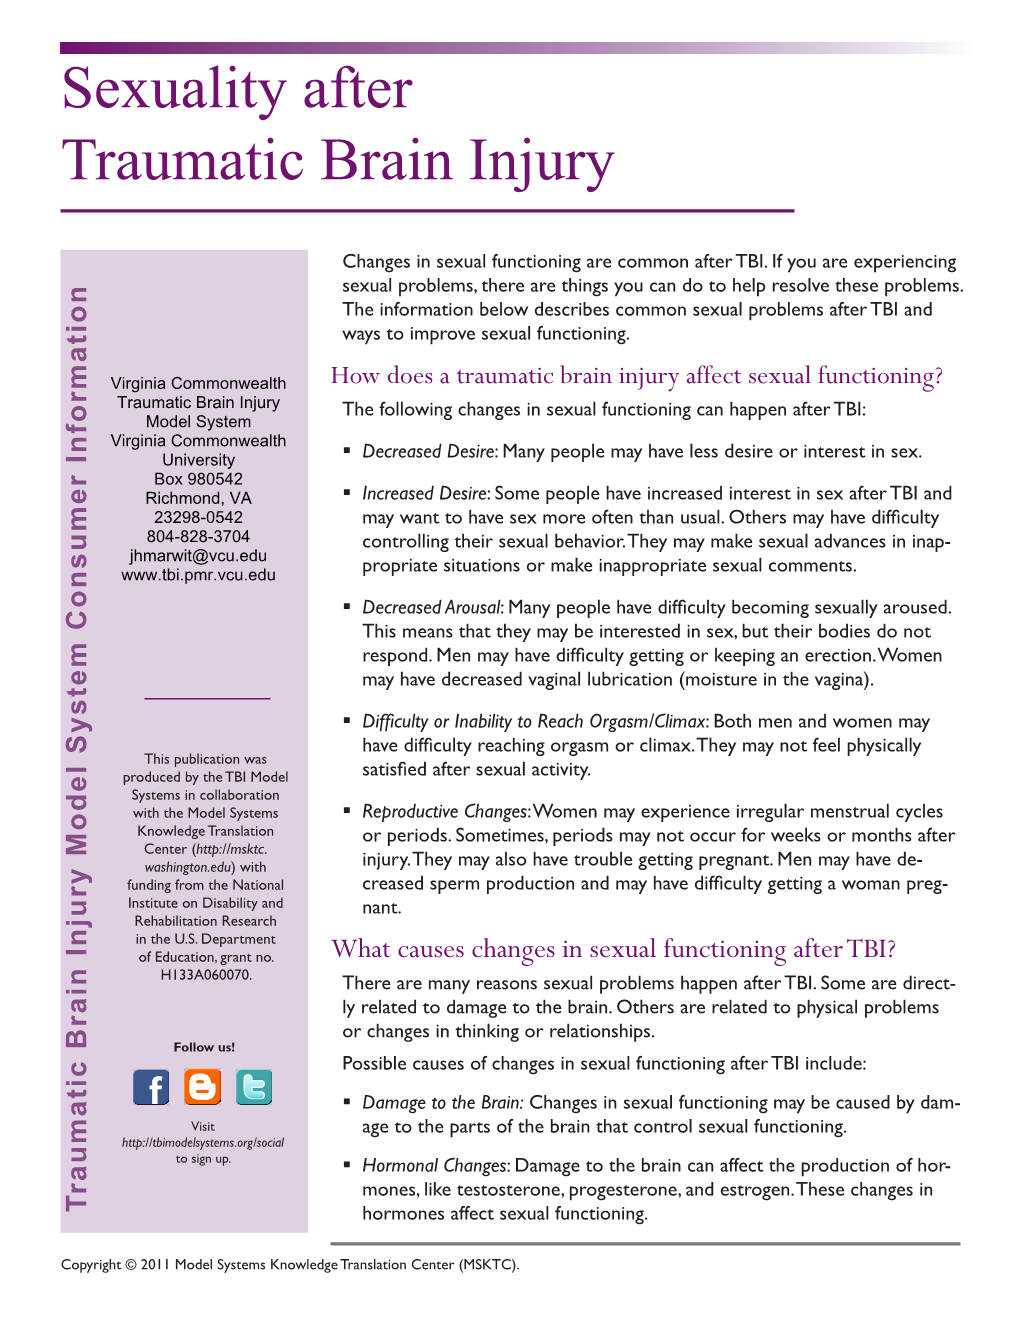 Sexuality After Traumatic Brain Injury